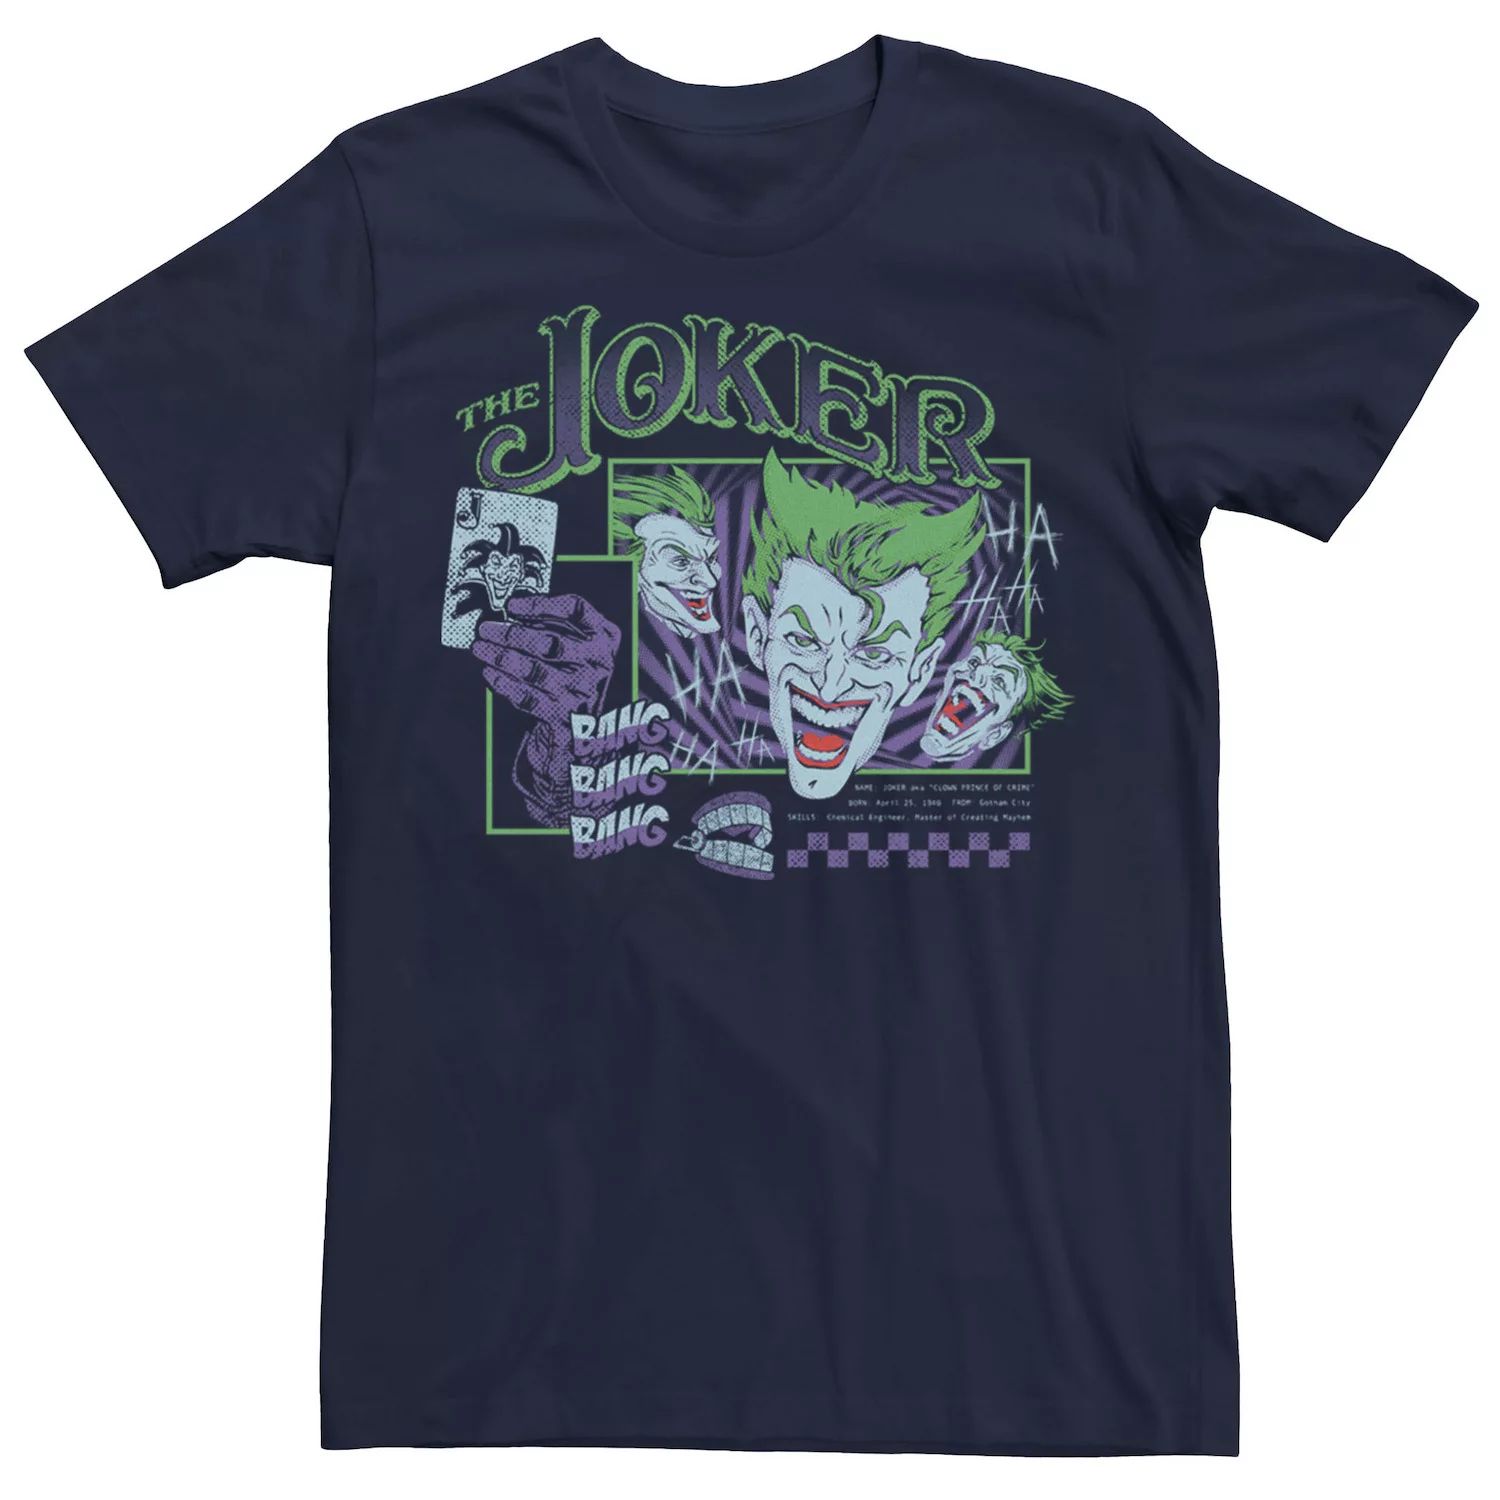 мужская футболка с коллажем бэтмен темный рыцарь готэма dc comics Мужская винтажная футболка с коллажем «Бэтмен Джокер» DC Comics